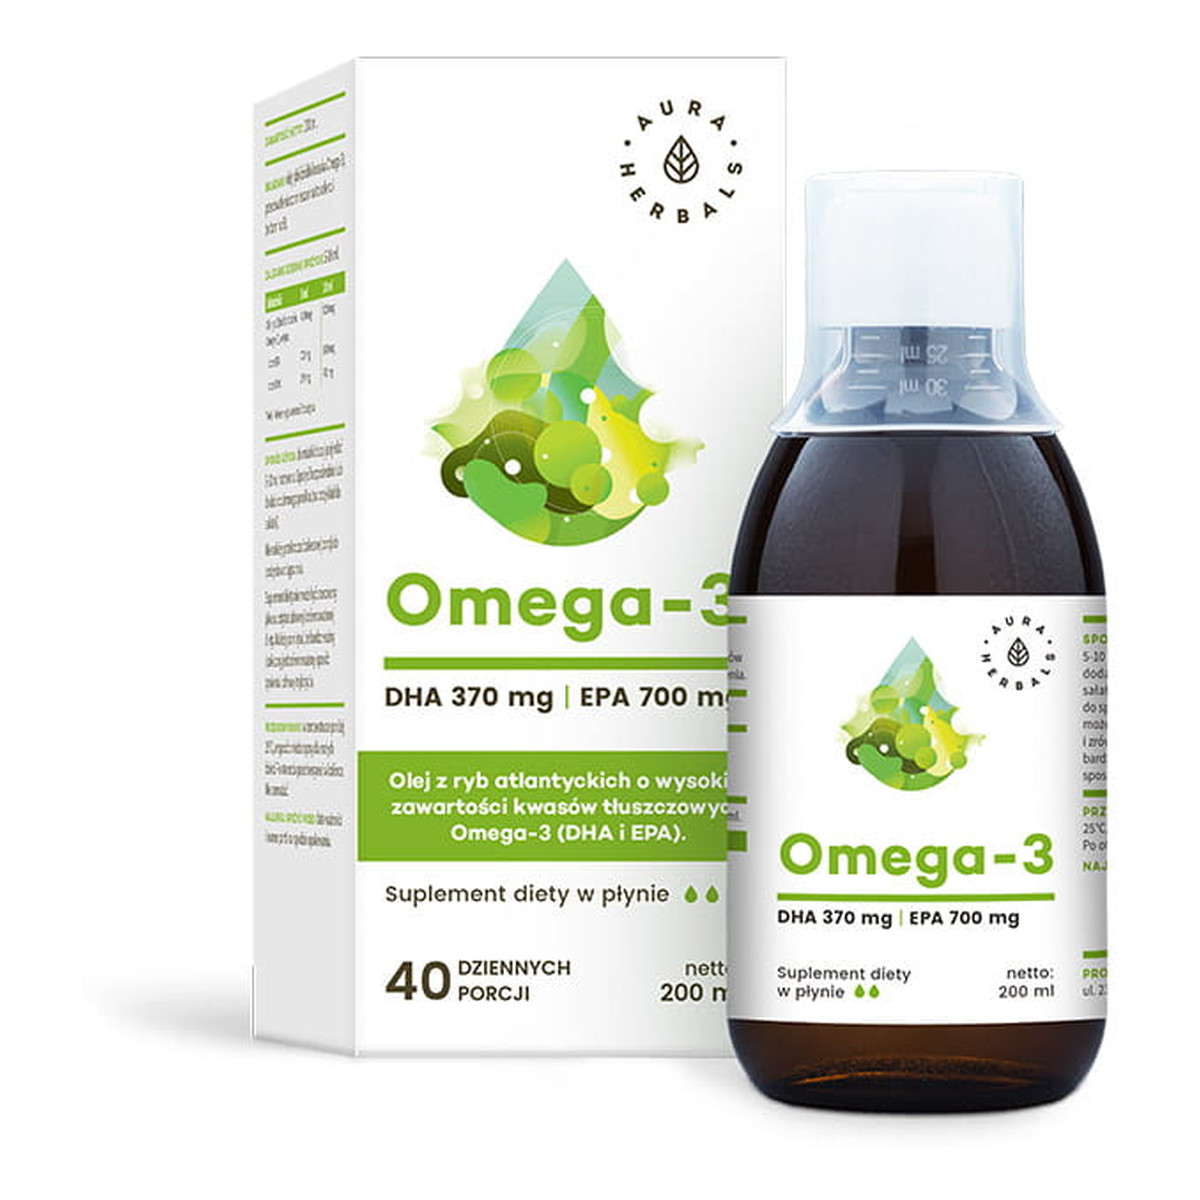 Aura Herbals Omega 3 DHA i EPA suplement diety w płynie 200ml